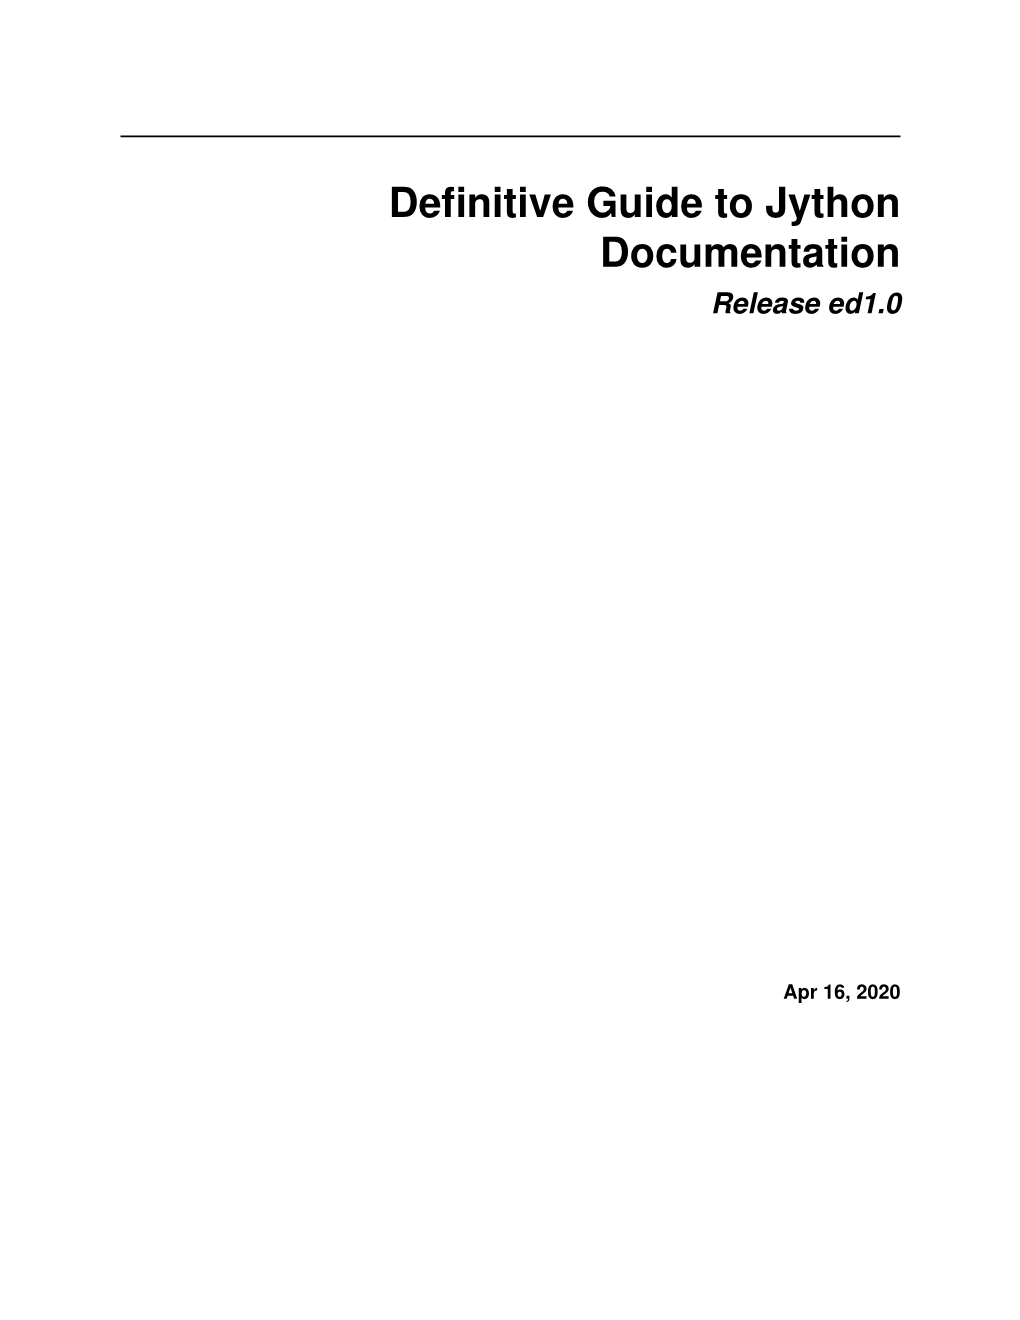 Definitive Guide to Jython Documentation